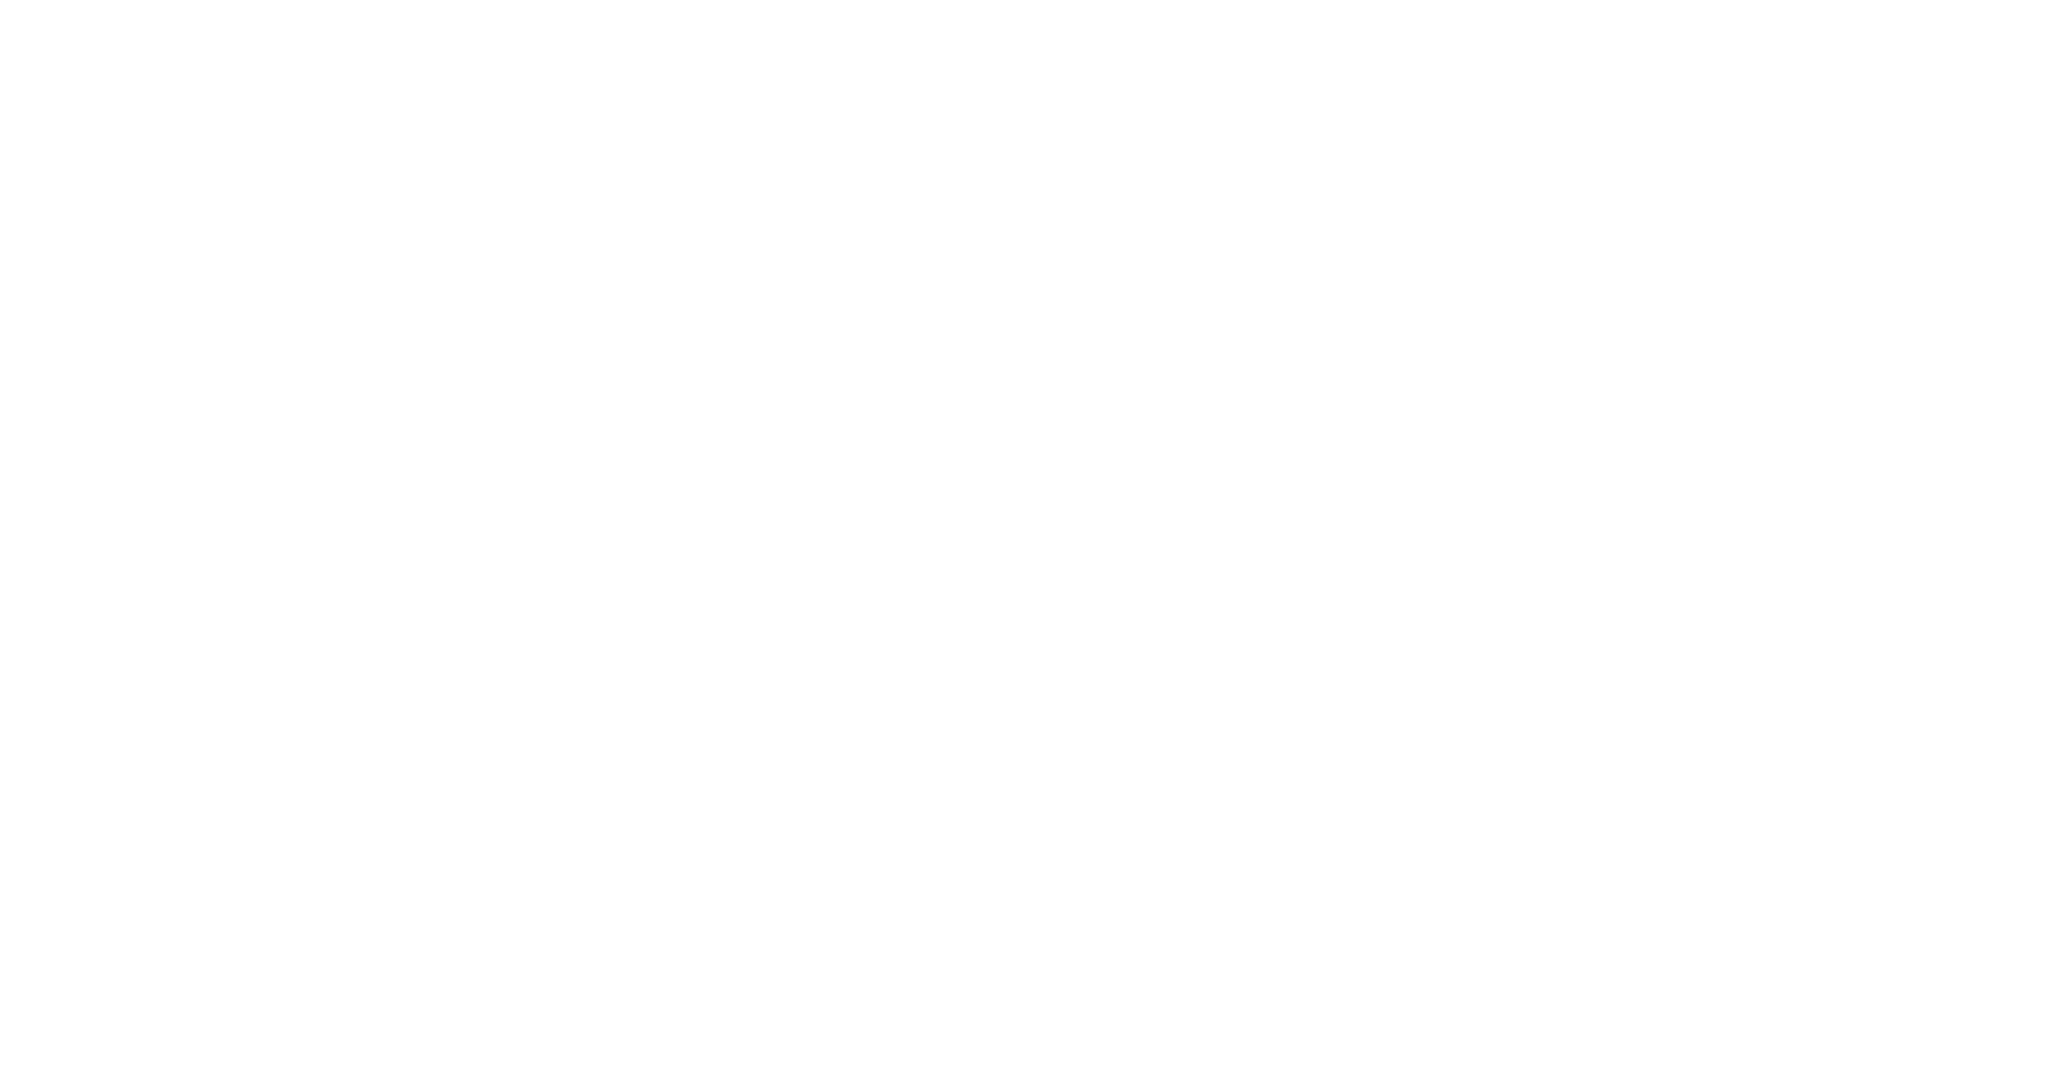 binarybrains-logo-white-2048x1087